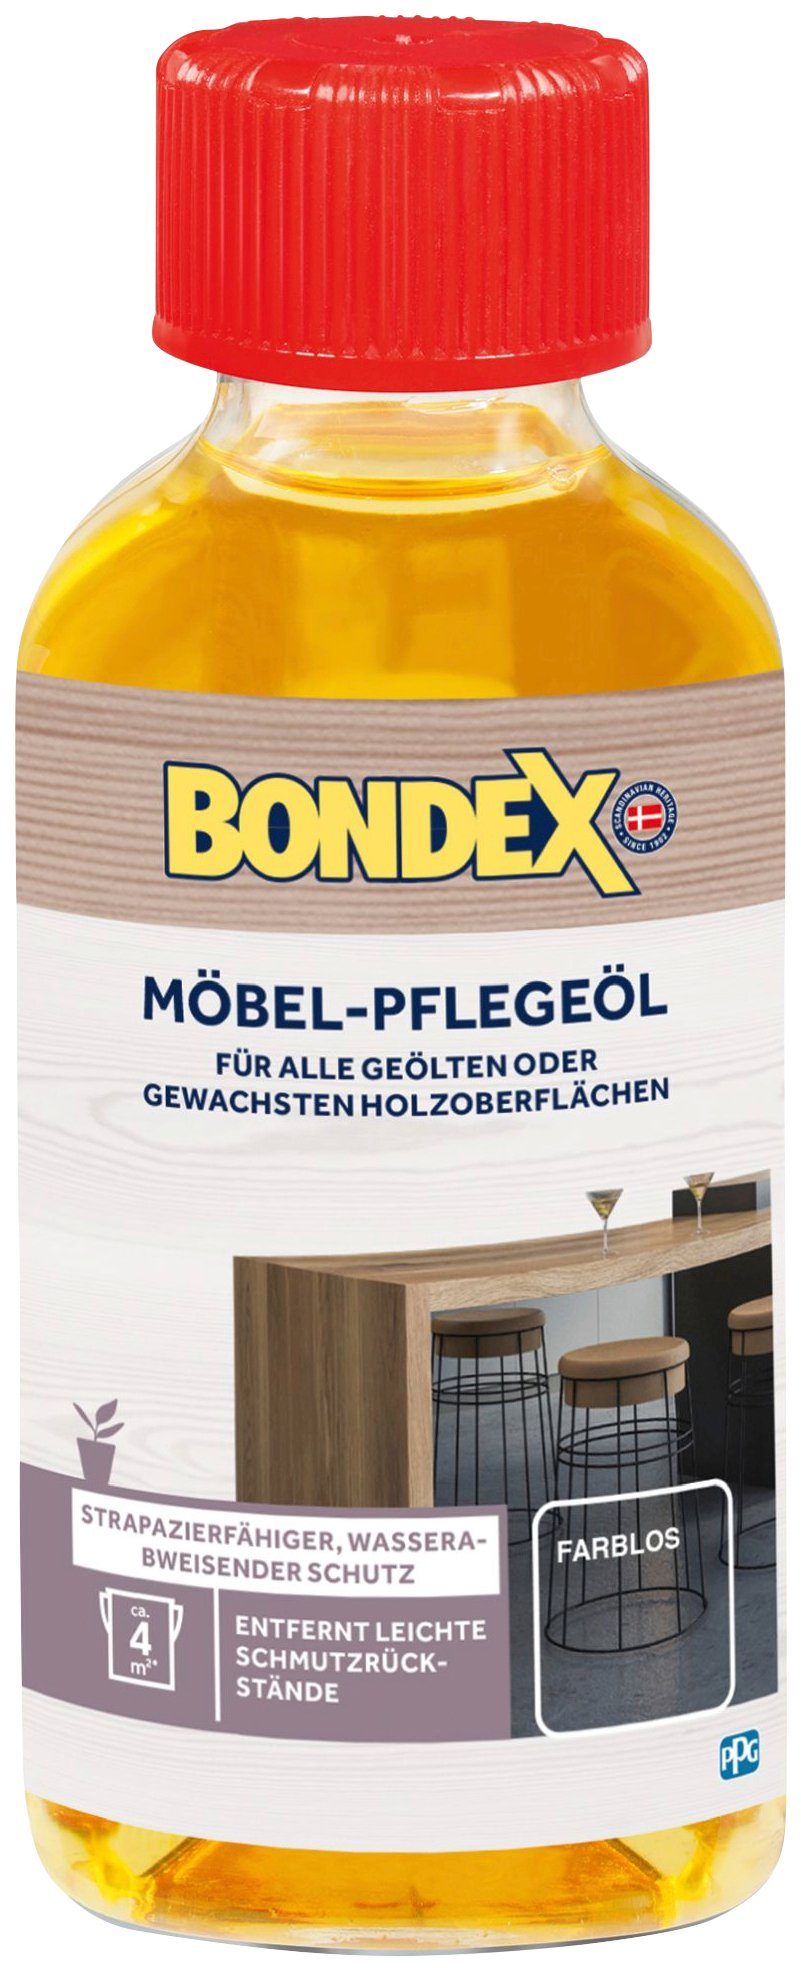 Liter Farblos, Holzöl MÖBEL-PFLEGEÖL, Bondex 0,15 Inhalt